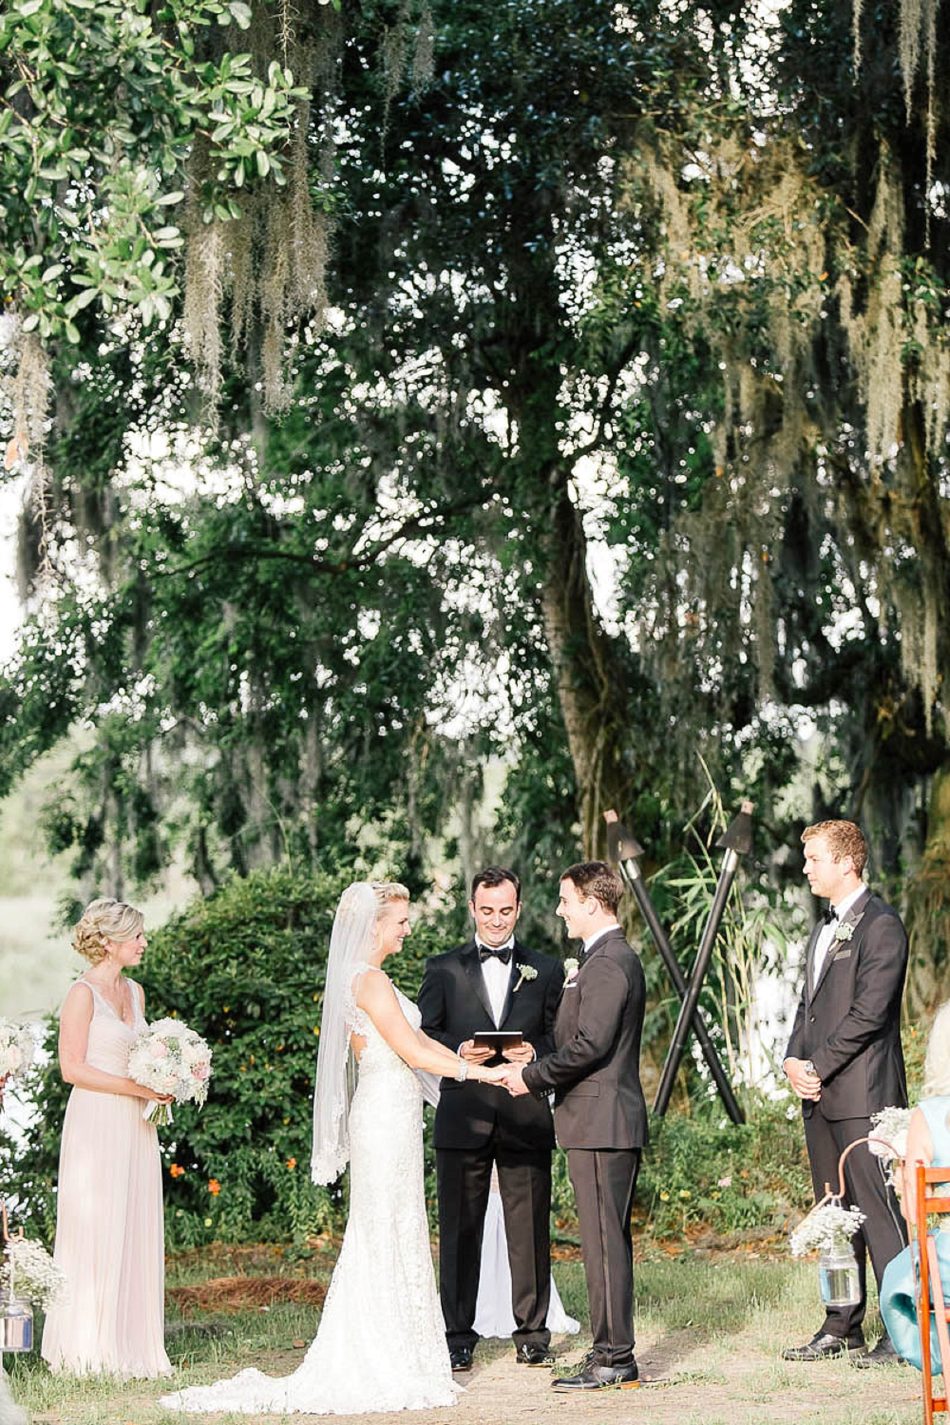 Bride and groom exchange vows, Magnolia Plantation, Charleston, South Carolina Kate Timbers Photography. http://katetimbers.com #katetimbersphotography // Charleston Photography // Inspiration